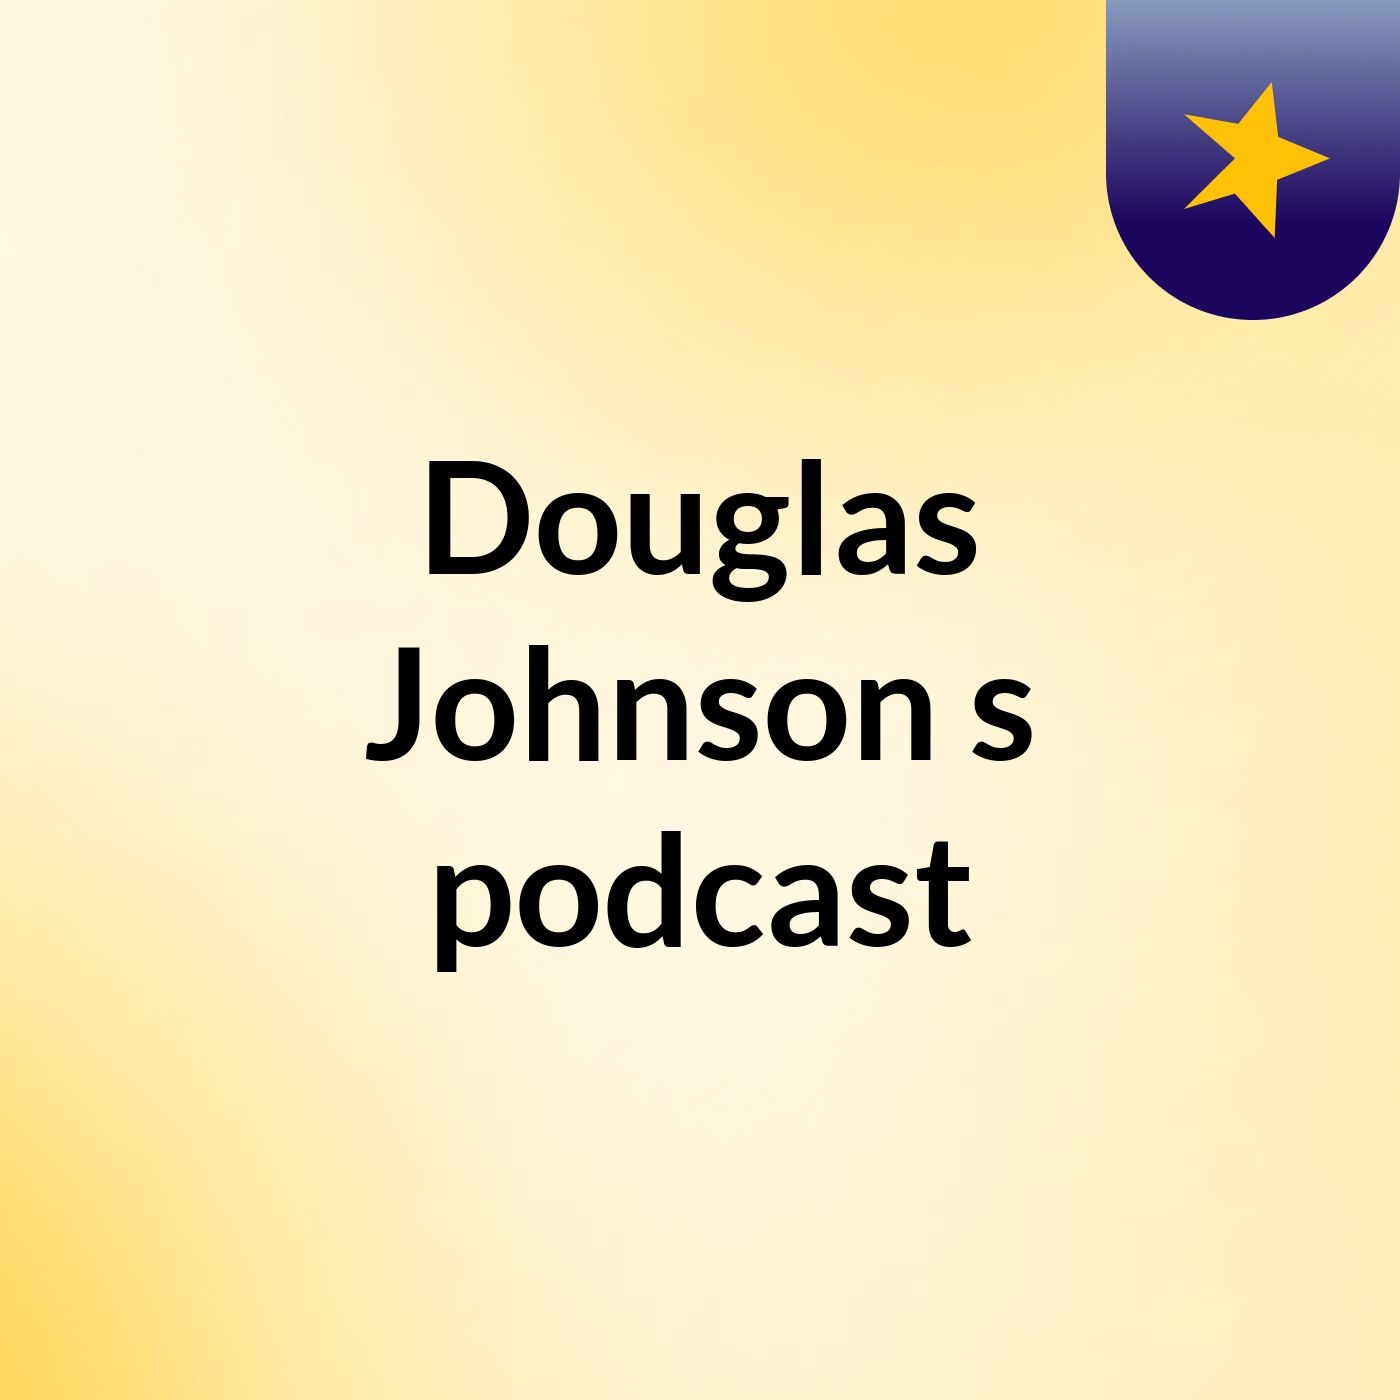 Douglas Johnson's podcast